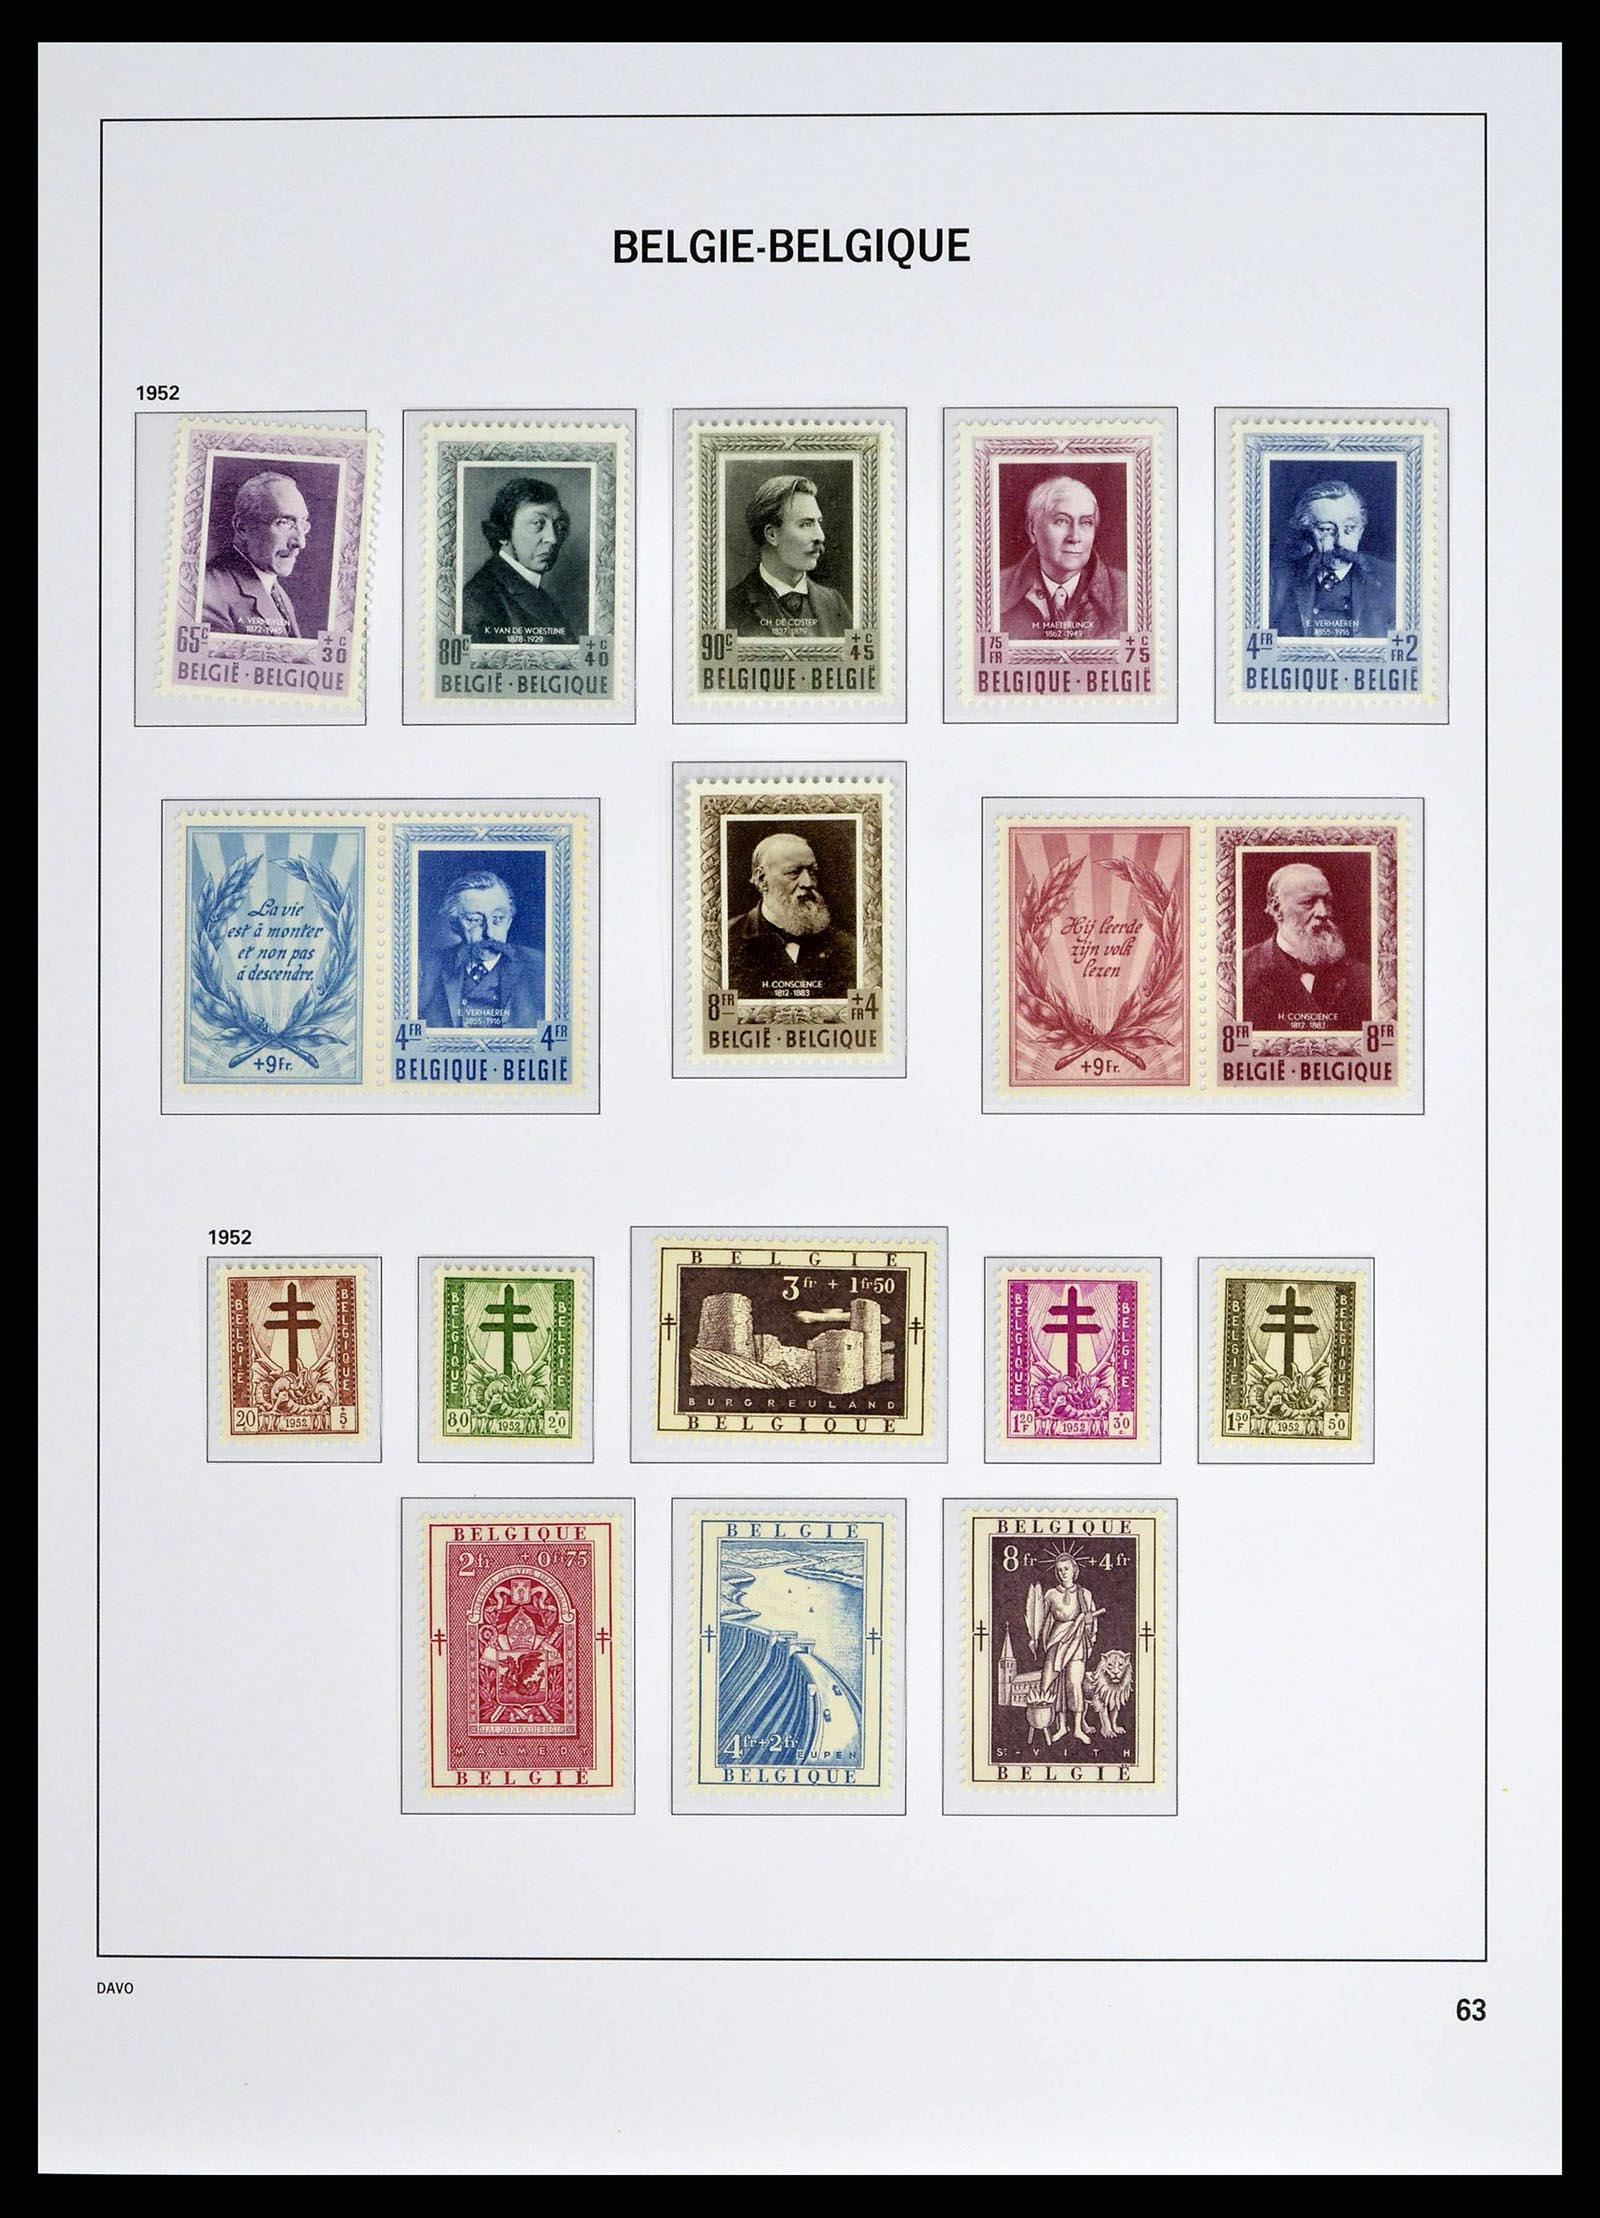 38525 0060 - Stamp collection 38525 Belgium 1911-1961.